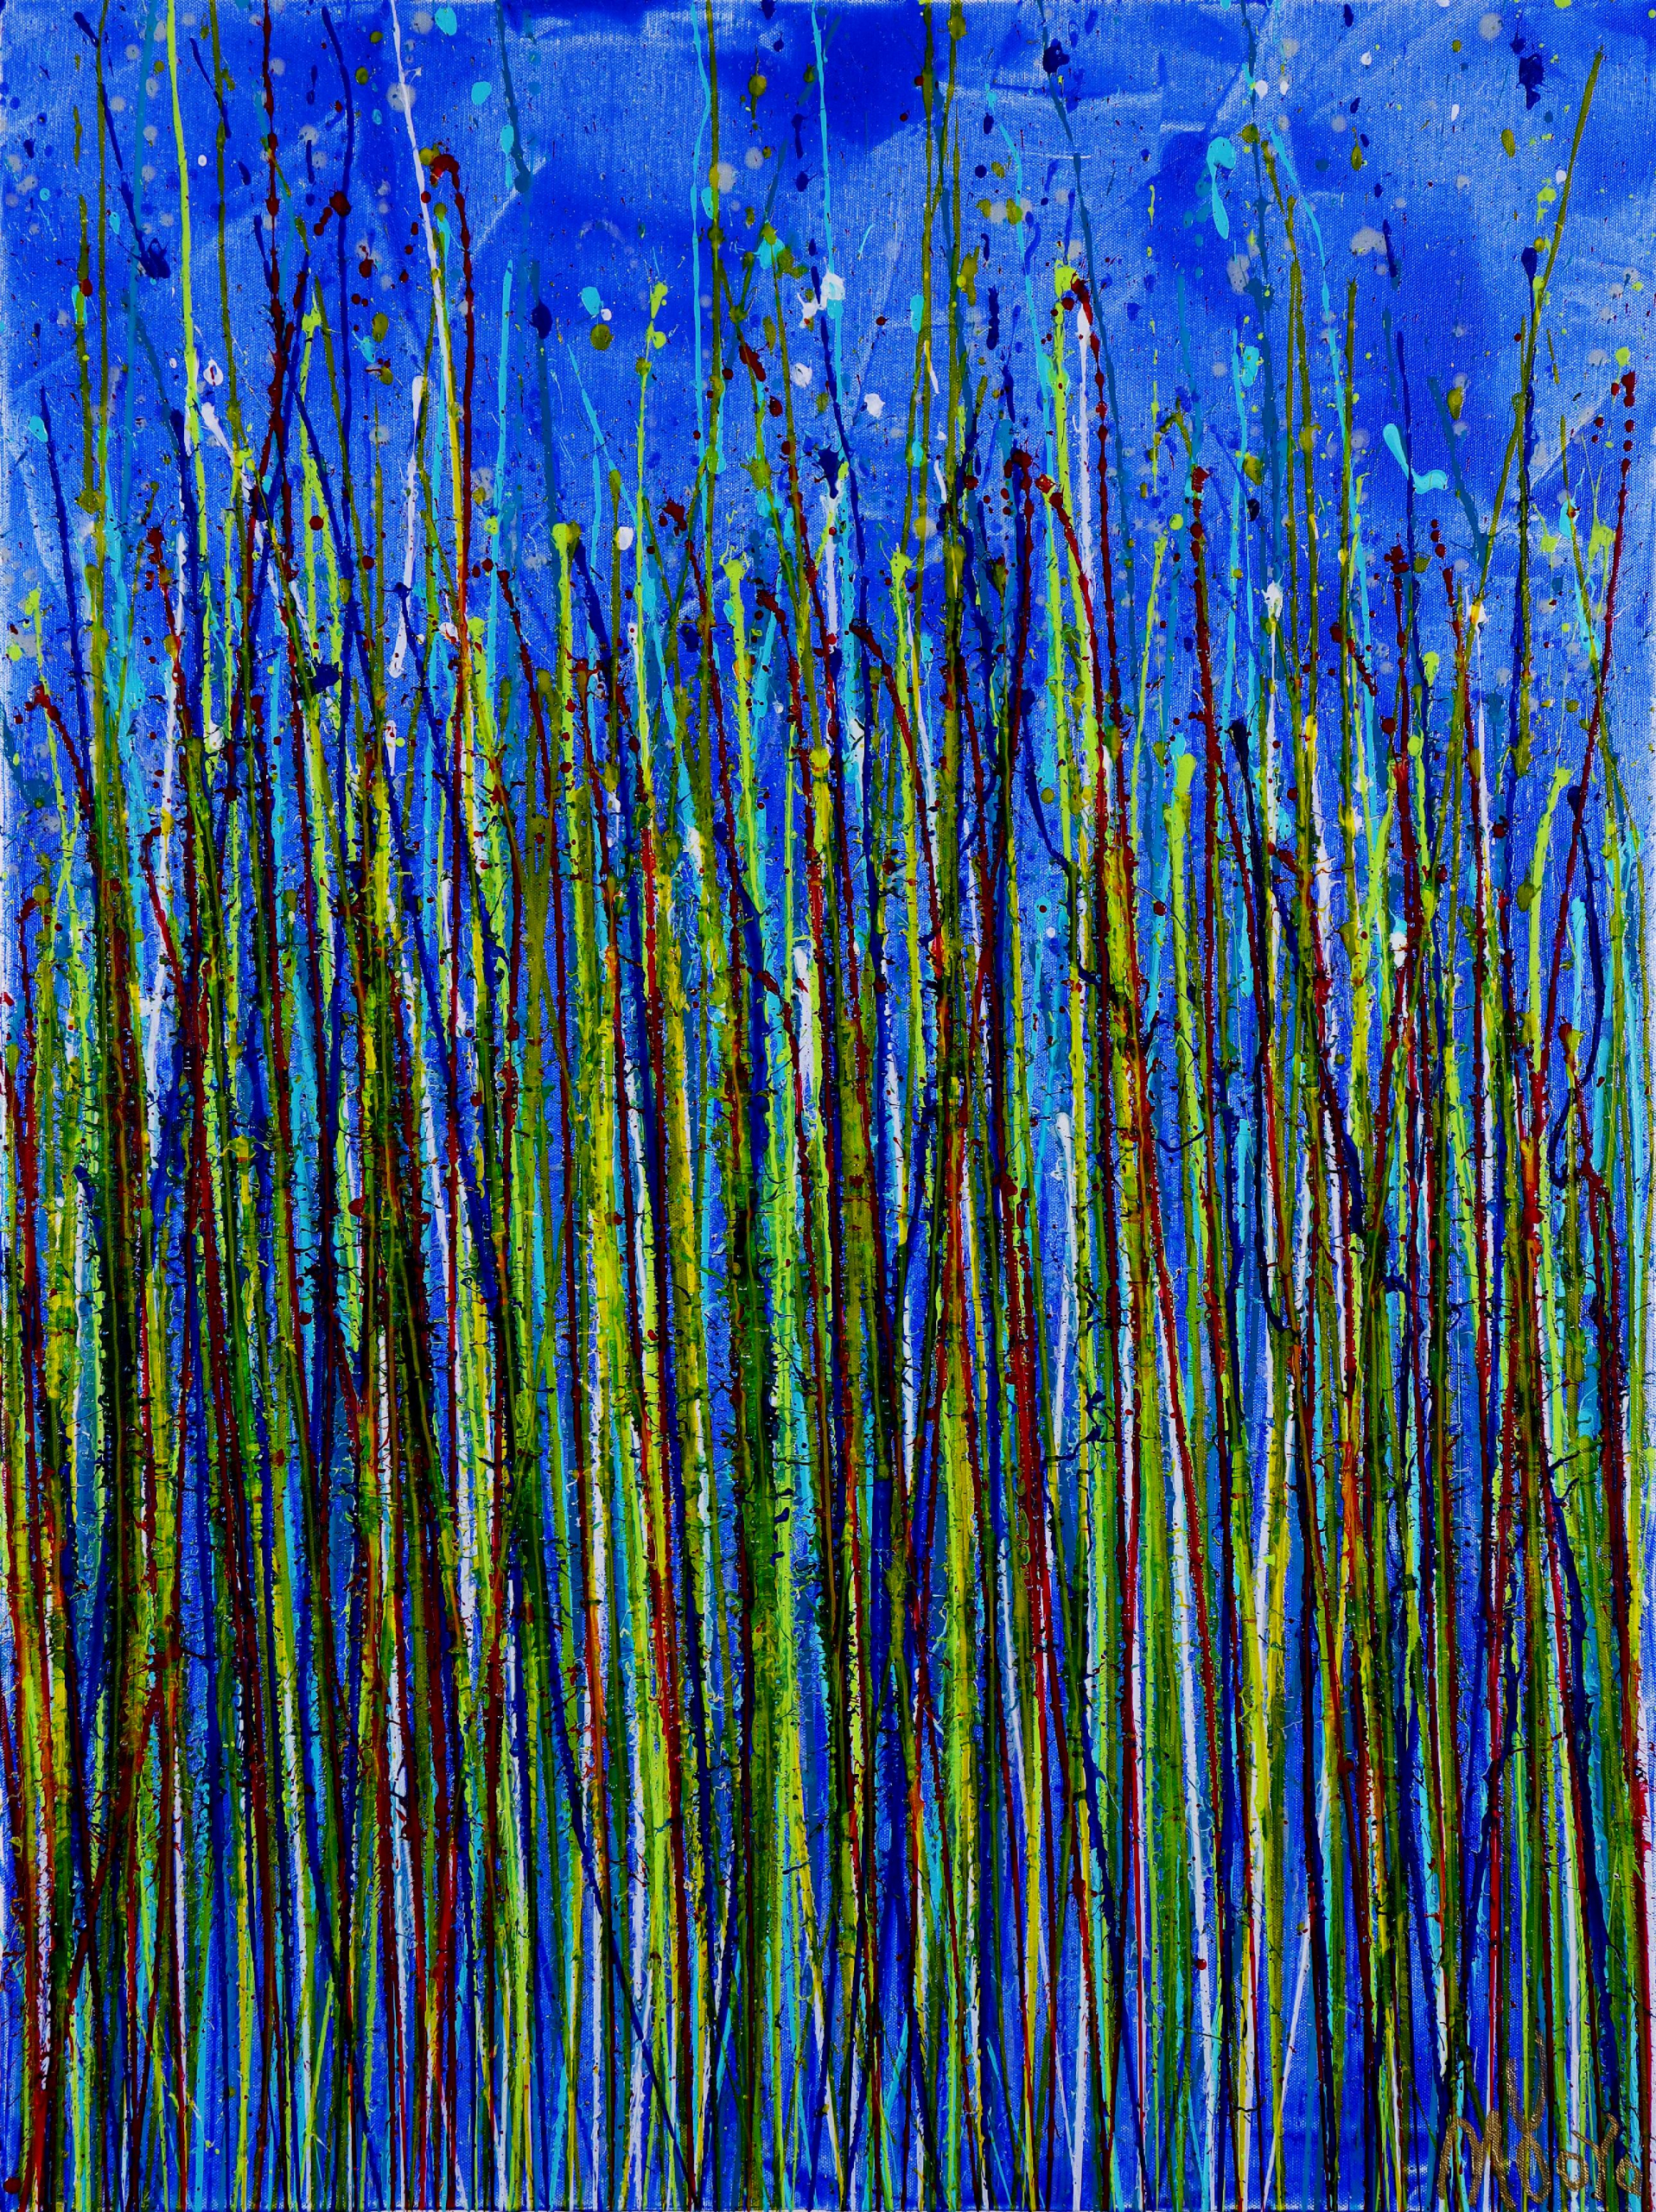 CANVAS 3 / Garden In Blue Mood (2022) - Triptych / 90x40 inches / Nestor Toro